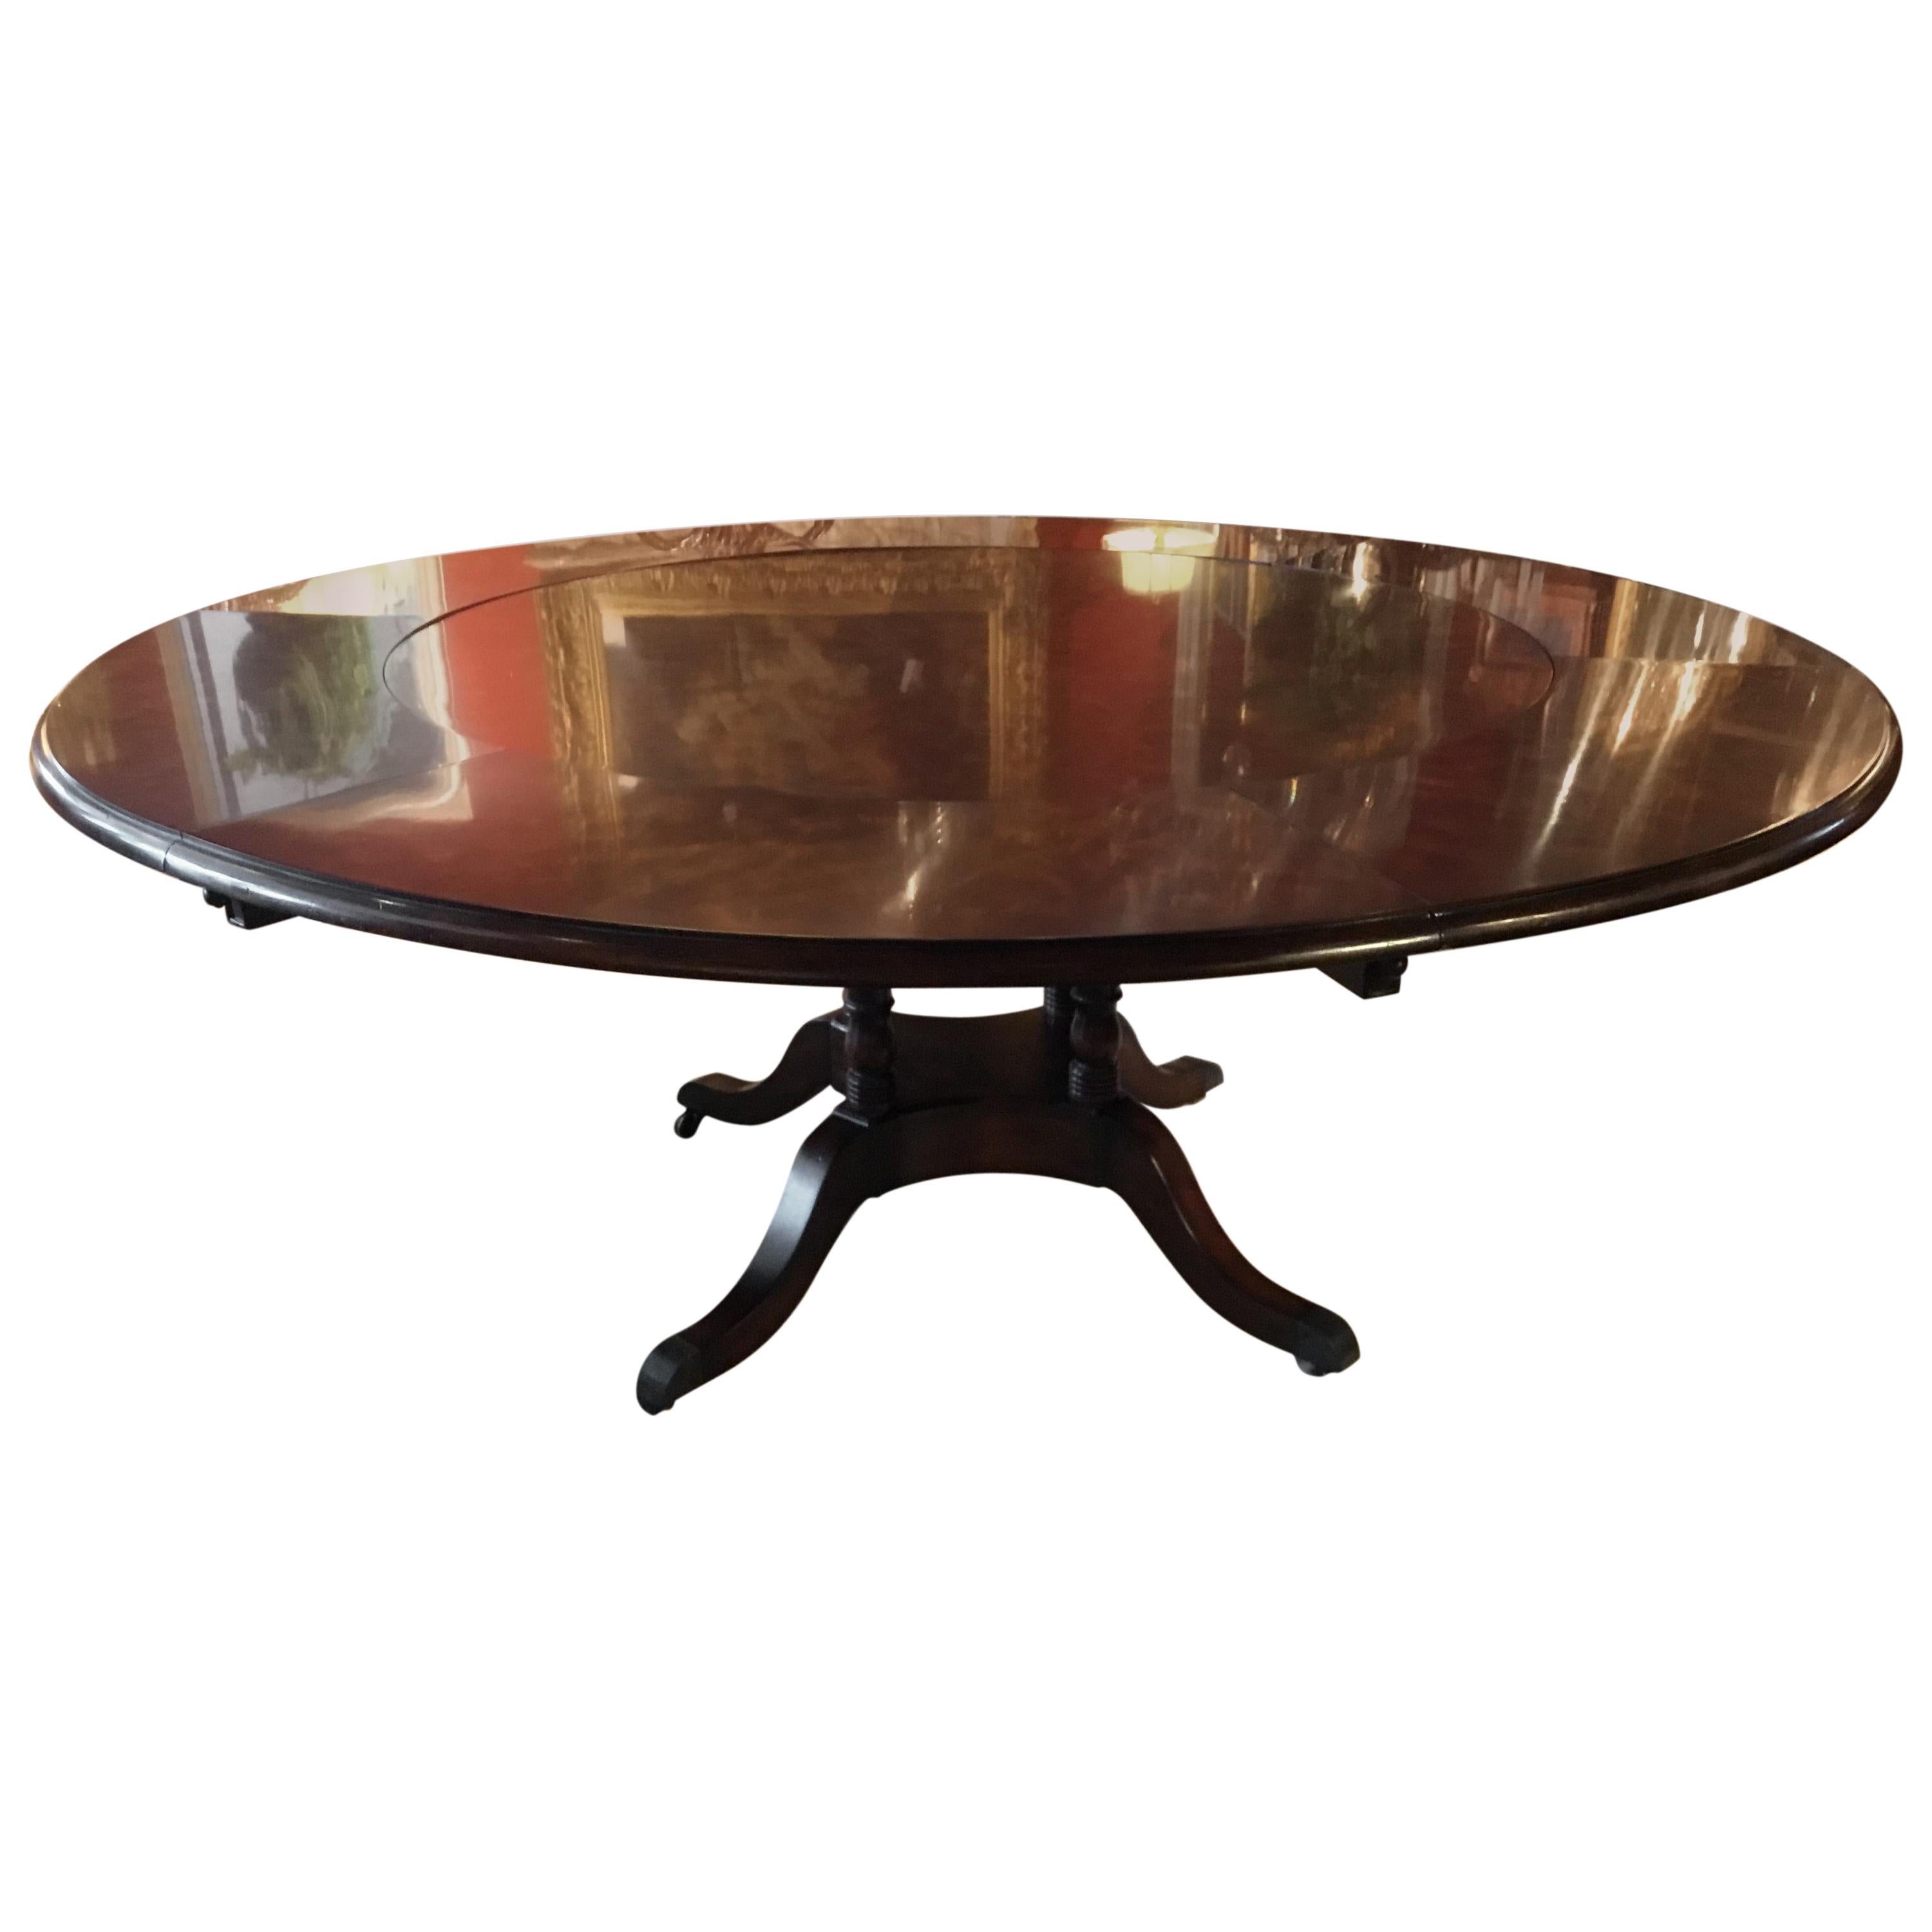 Round Theodore Alexander Dining Table in Mahogany Flame Veneers Regency Styled